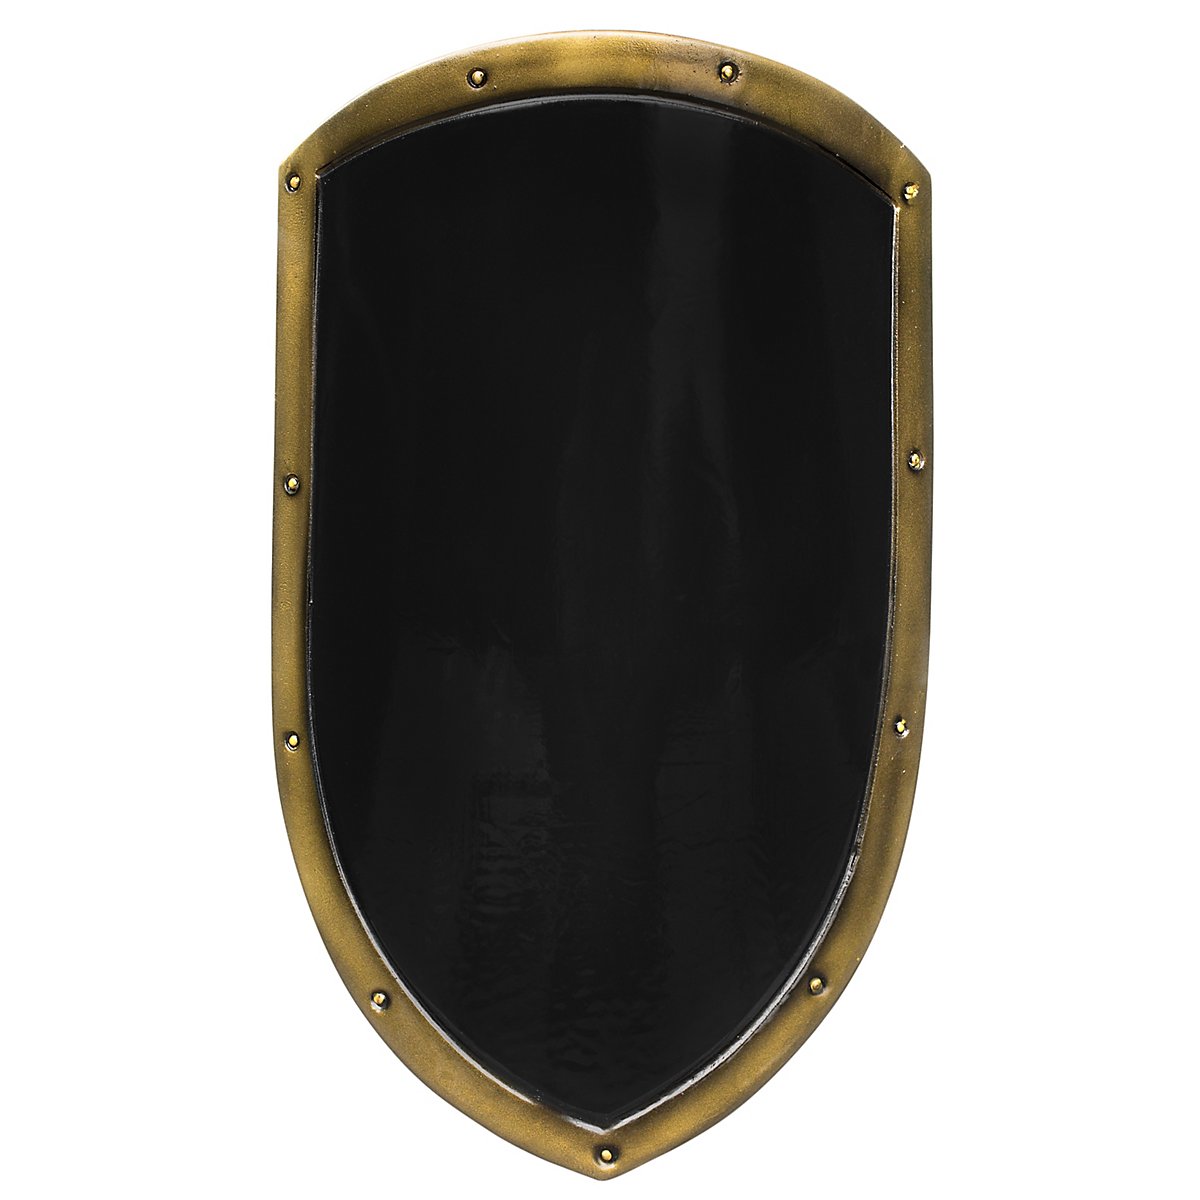 Beginner's kite shield black/gold 60x36cm Black/Gold - andracor.com